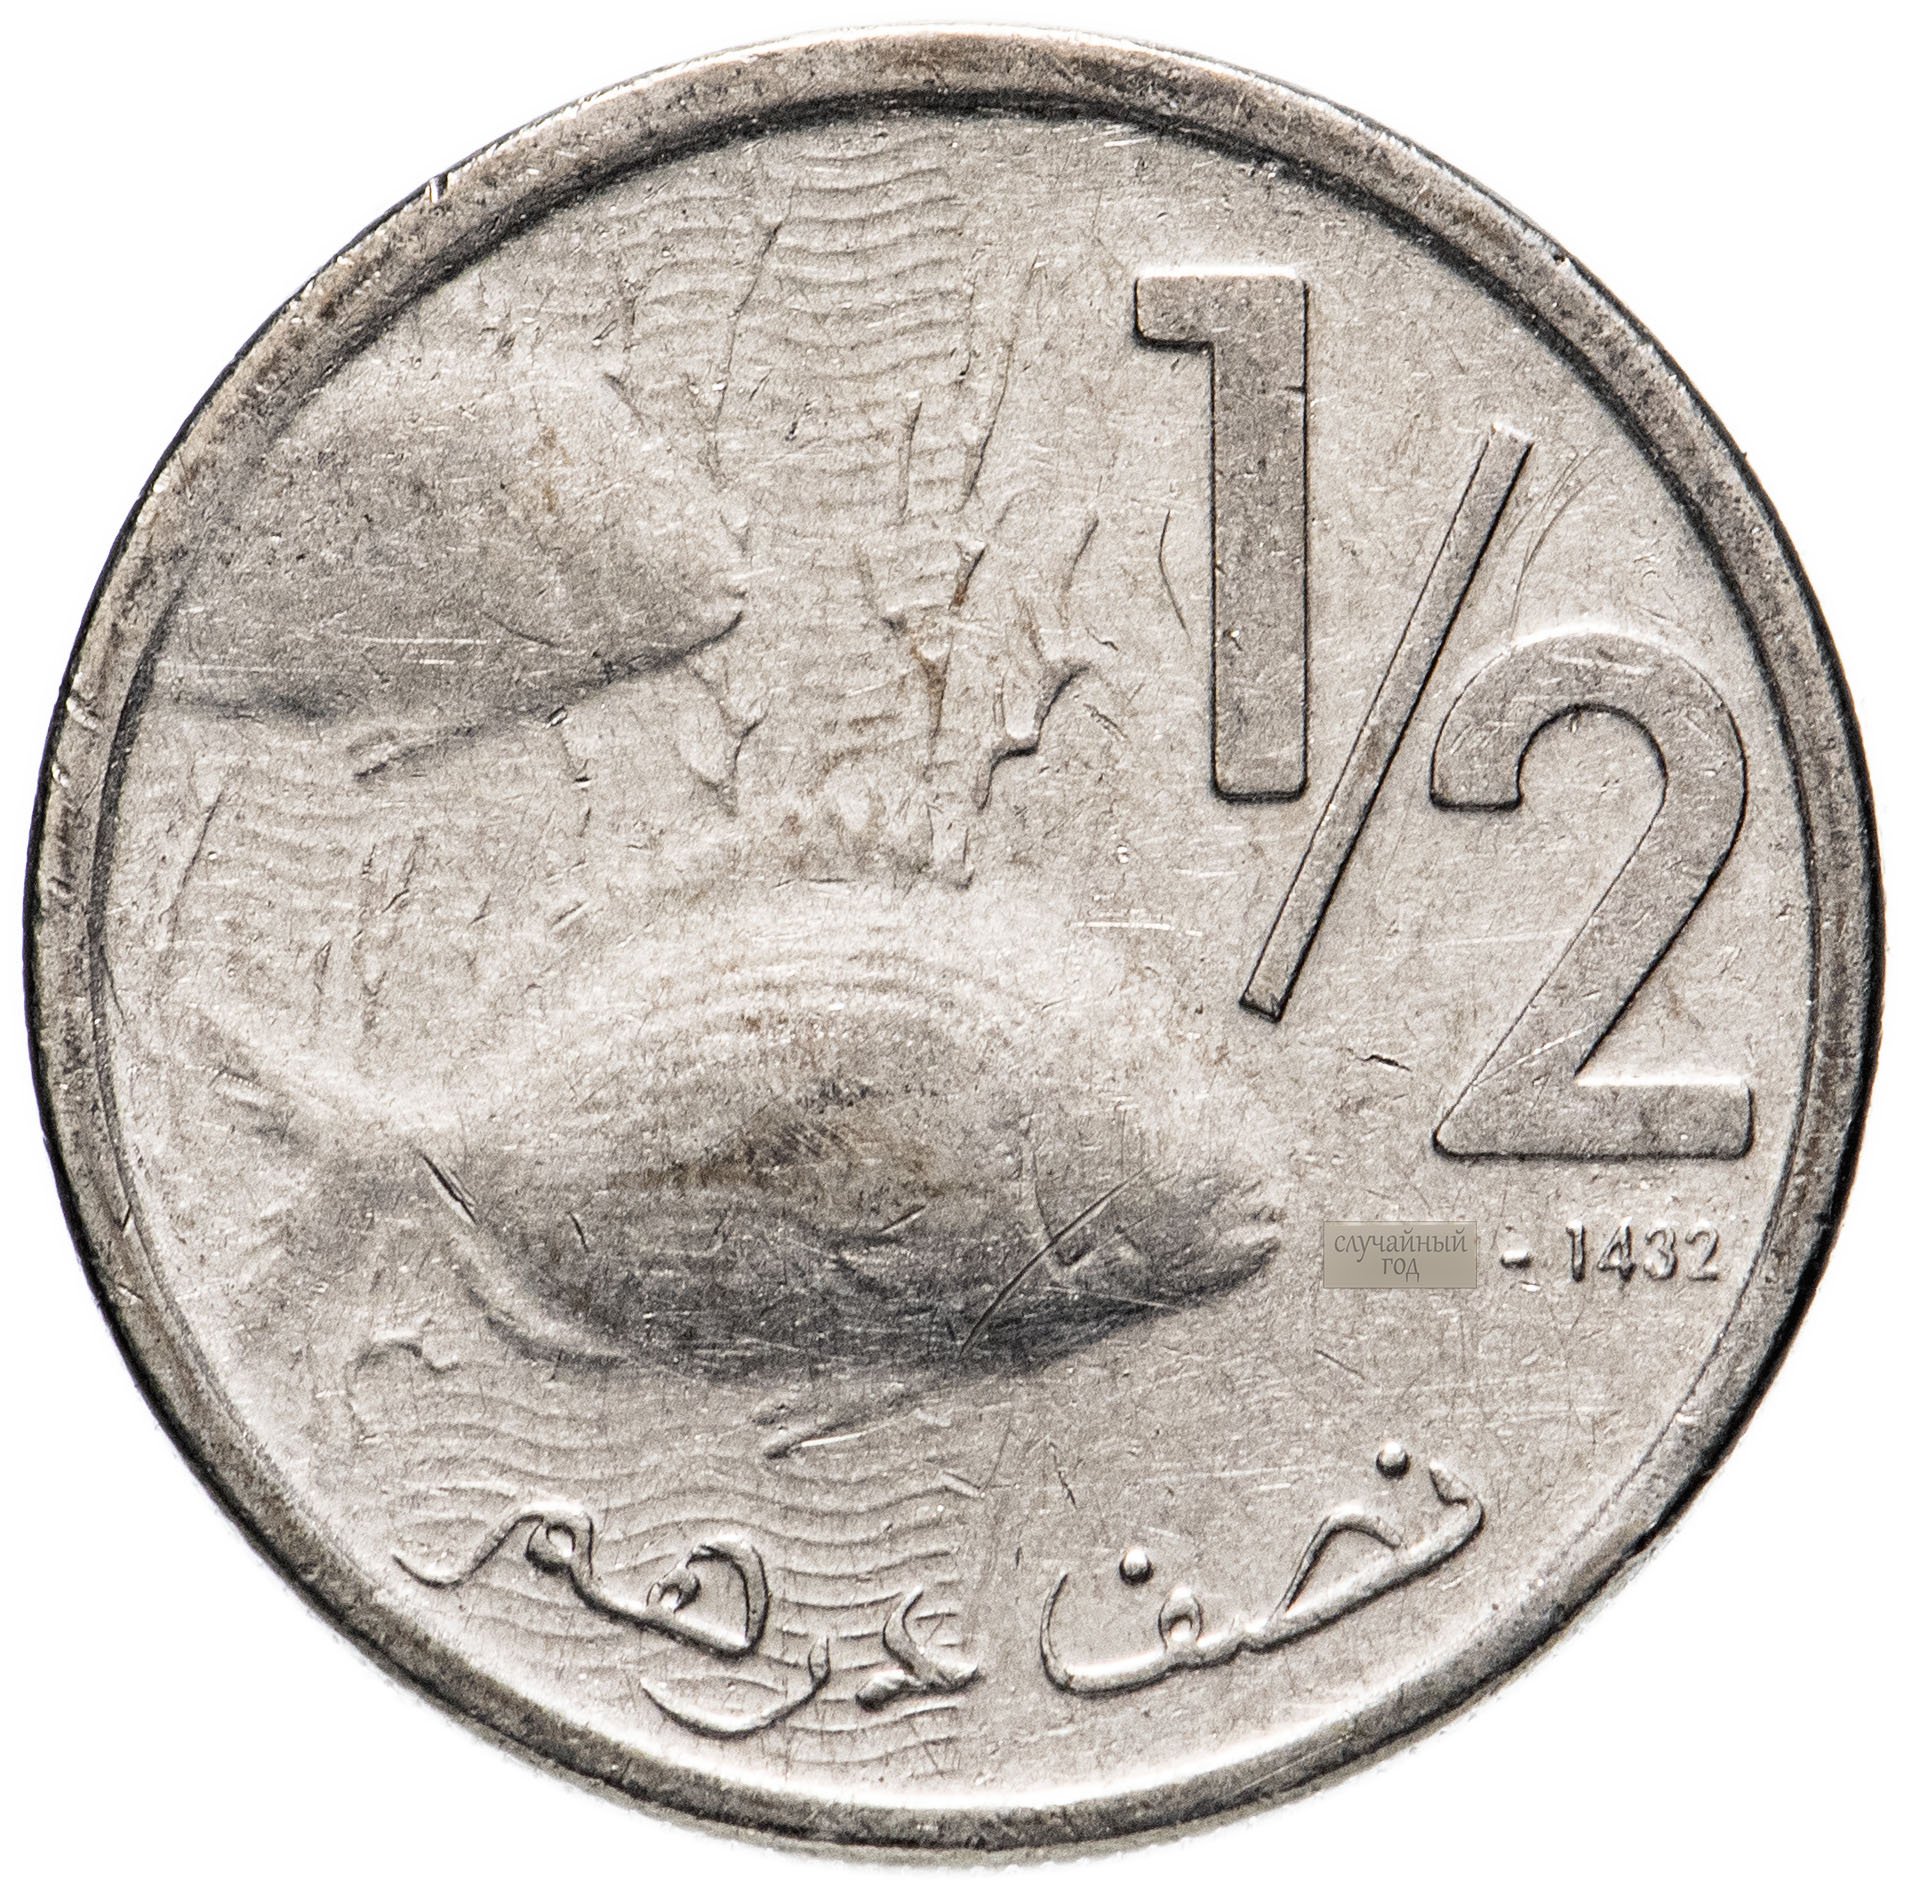 30000 дирхам. 1/2 Дирхама Марокко. 2 Дирхама монета. Монеты Марокко. Монета 2011-1432.